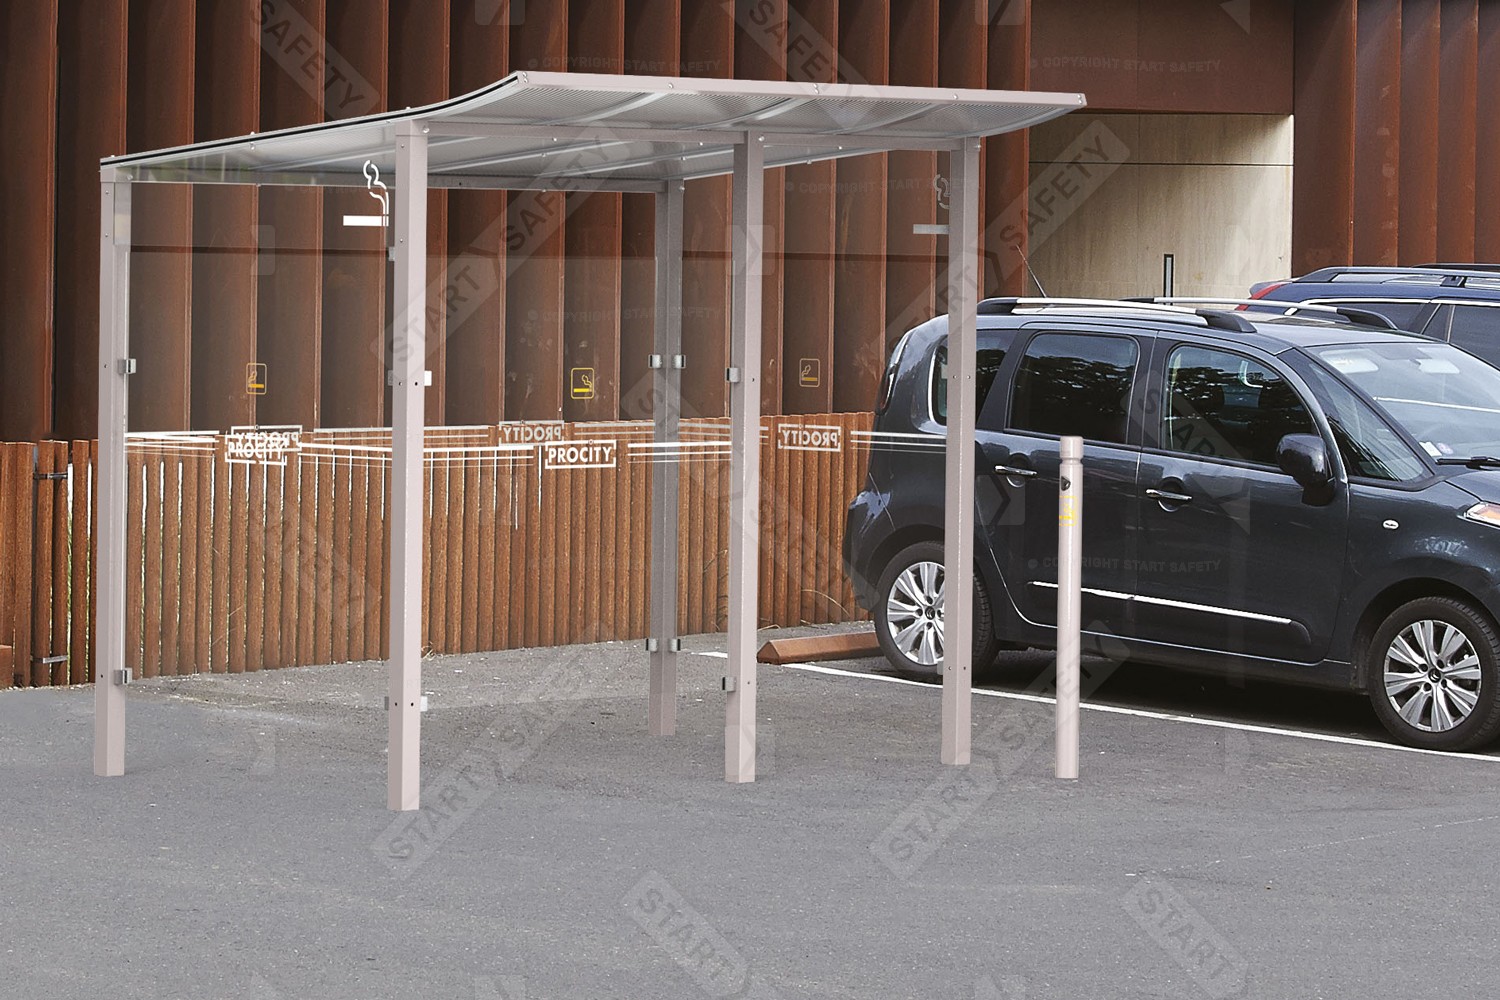 Procity Modulo Smoking and Vaping Shelter Installed In Car Park With Procity Smoking Ashtray Bollard